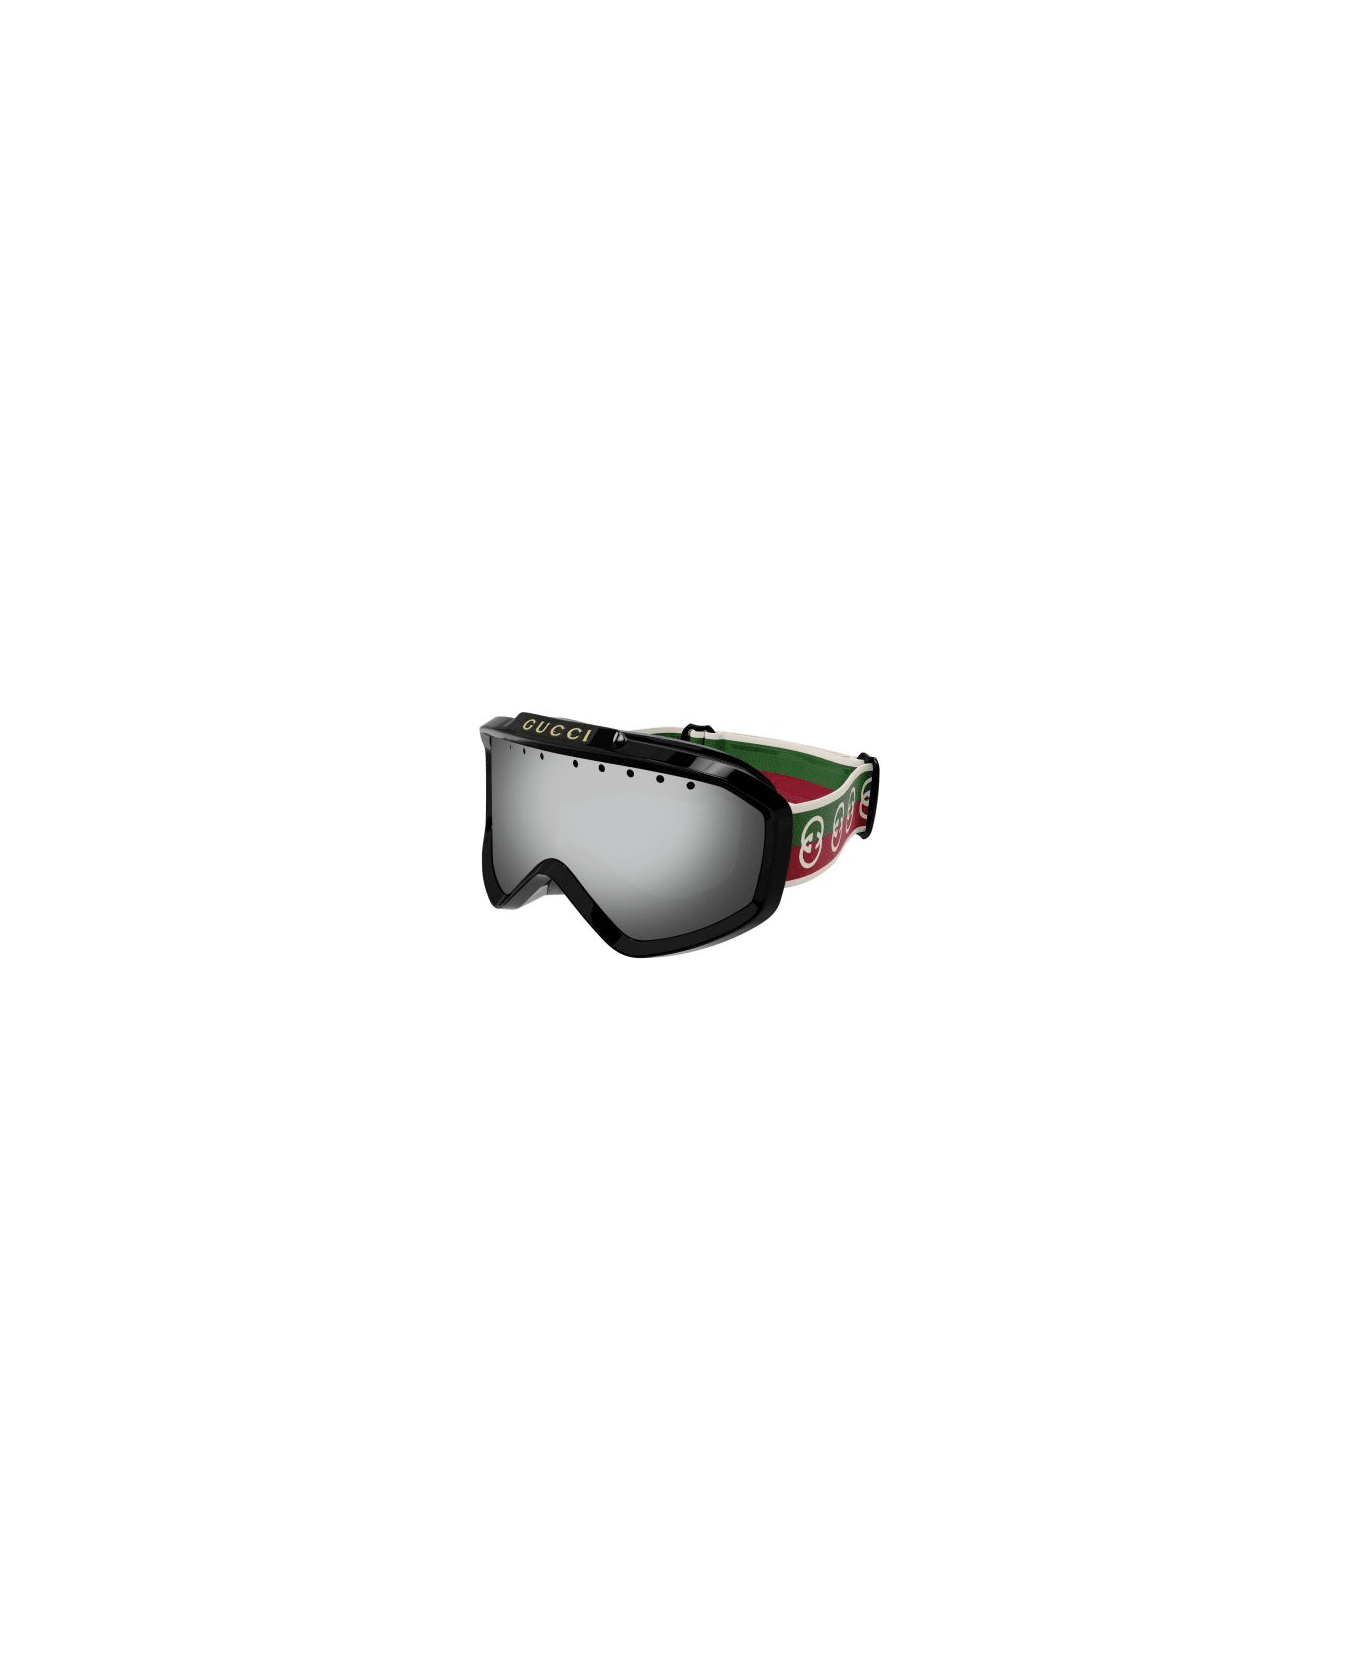 Gucci Eyewear Gg1210s Sunglasses - 001 black green silver サングラス